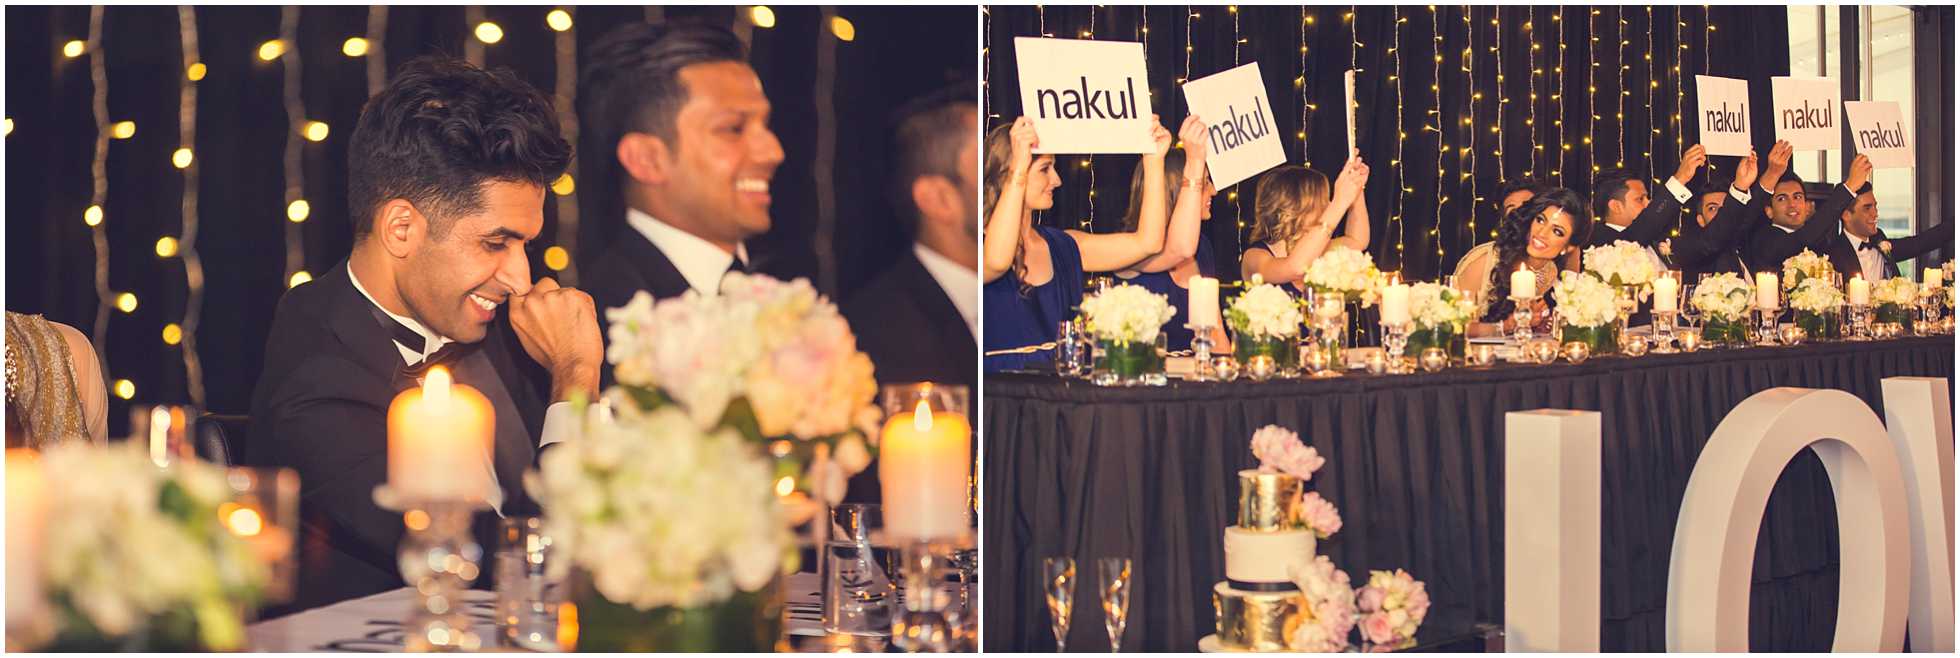 Indian Wedding Photoshoot in Melbourne Australia